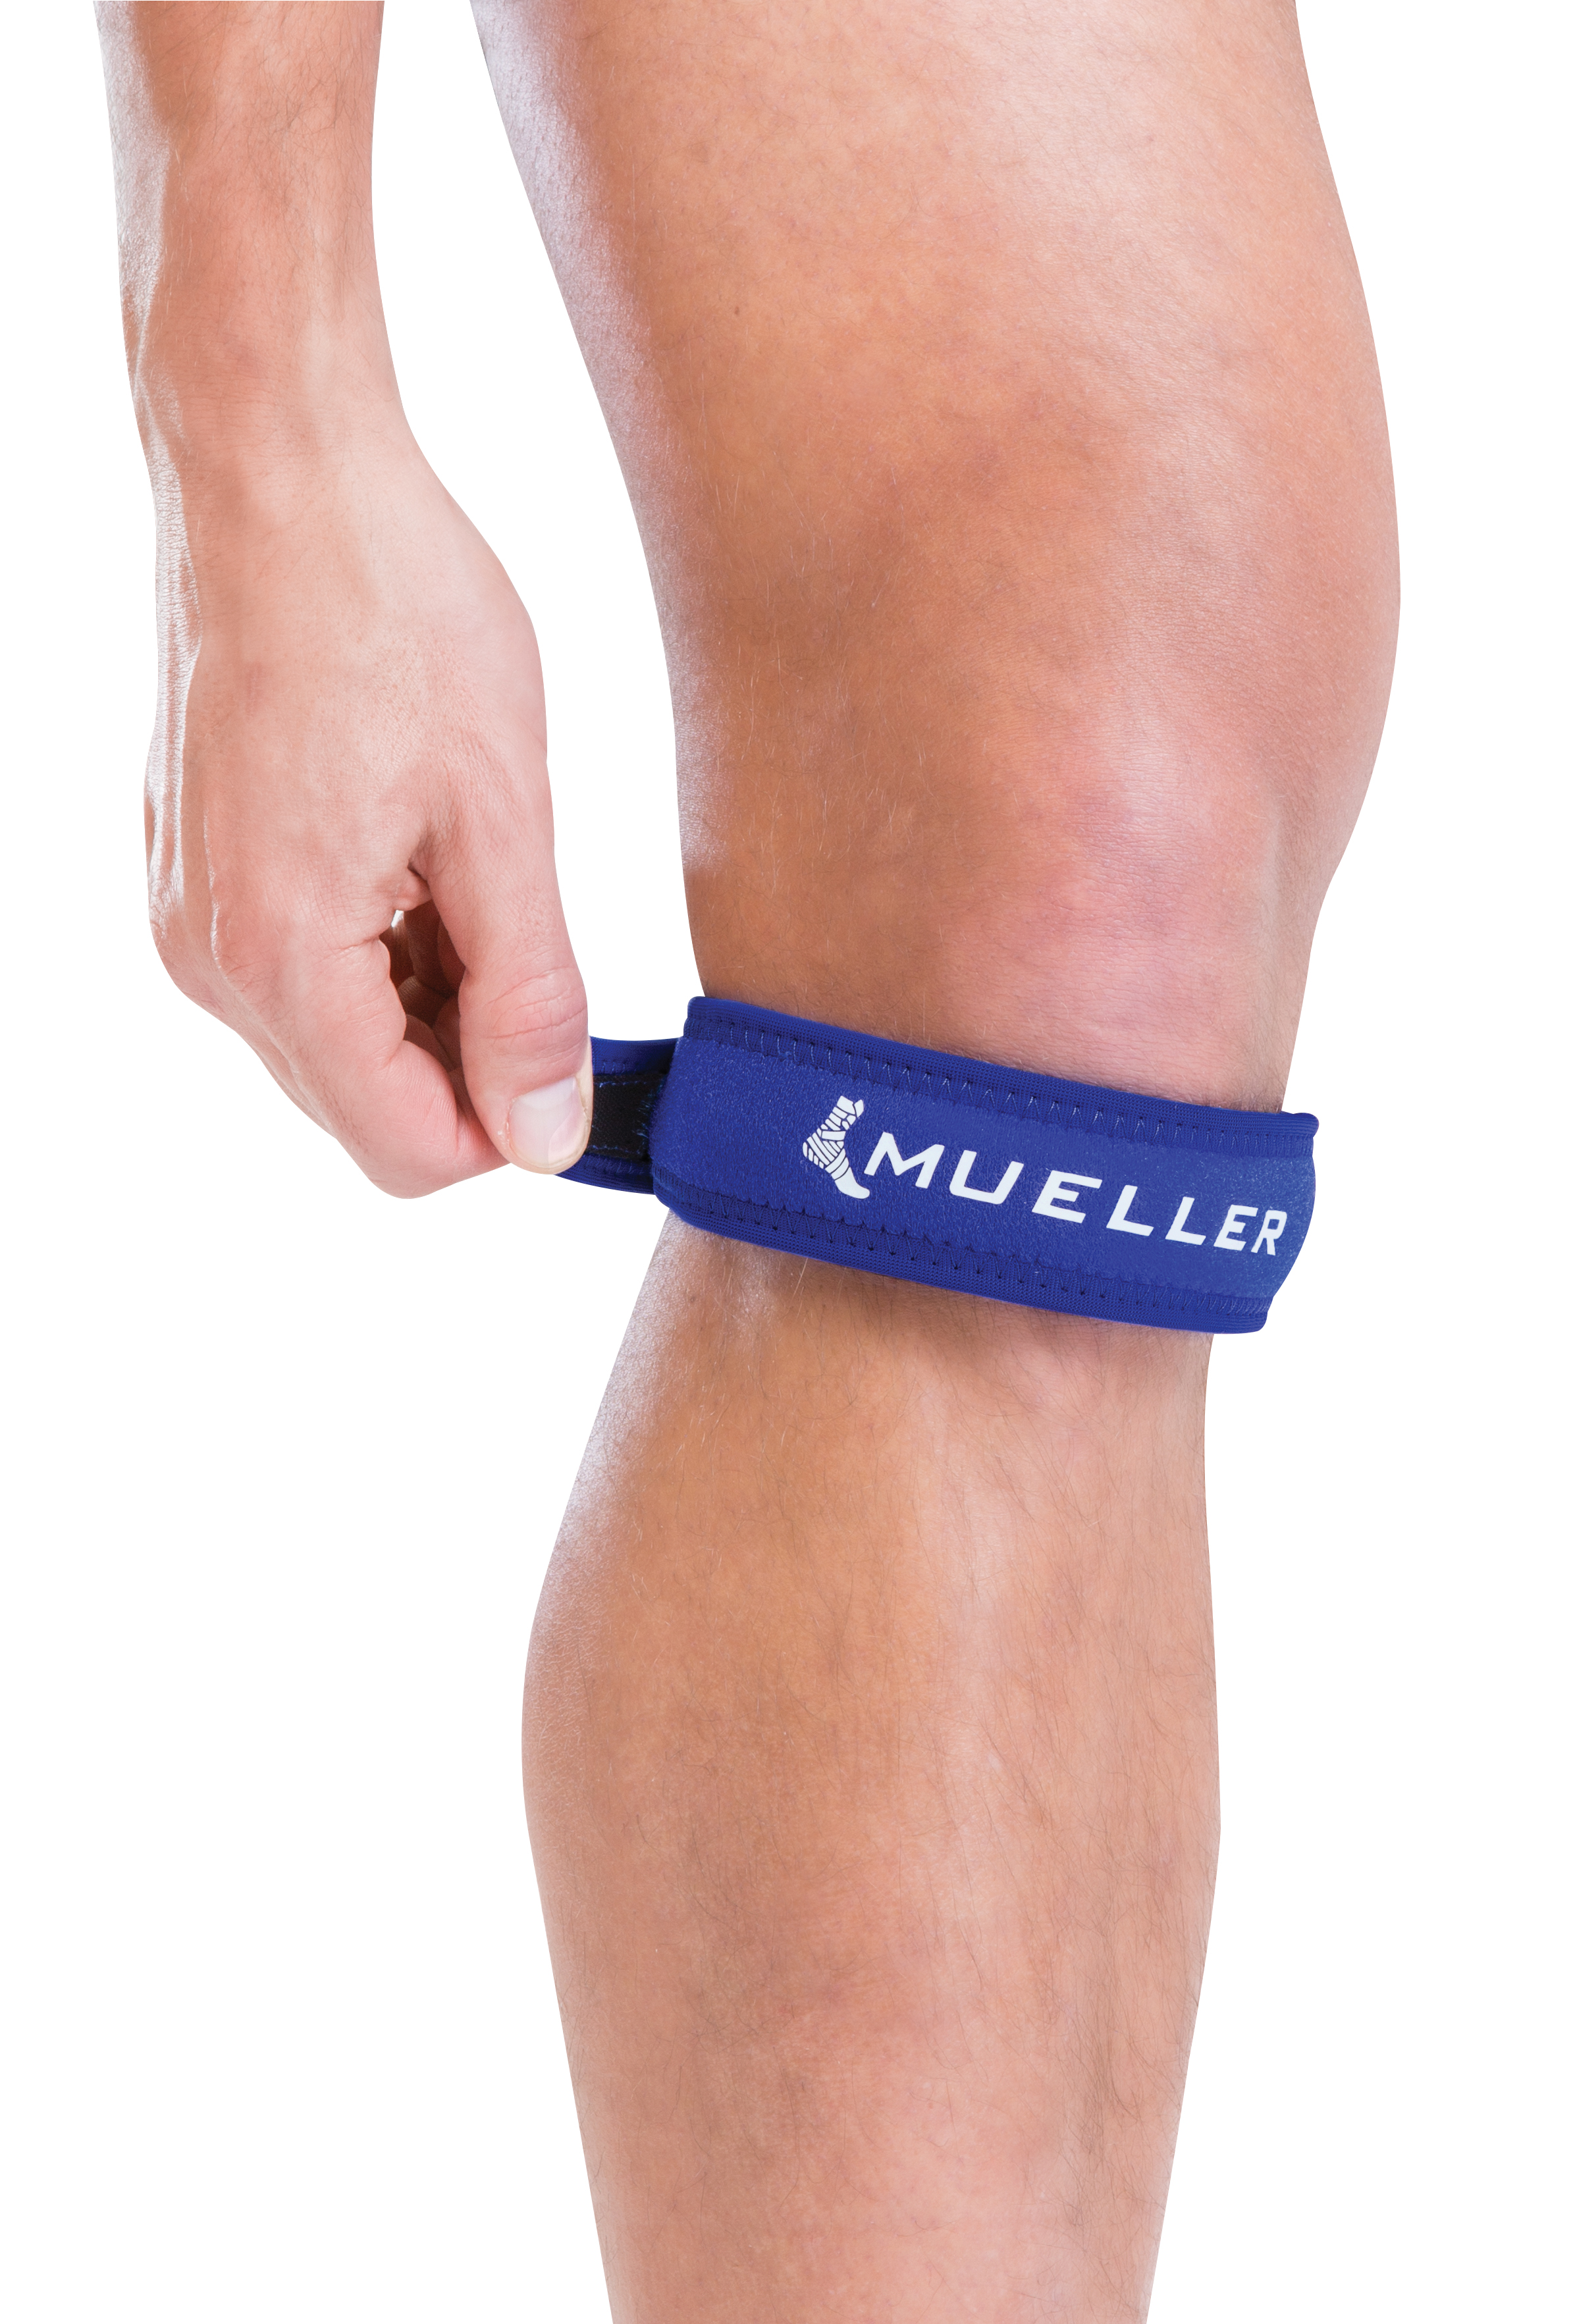 Mueller Jumper's Knee Strap - Blau